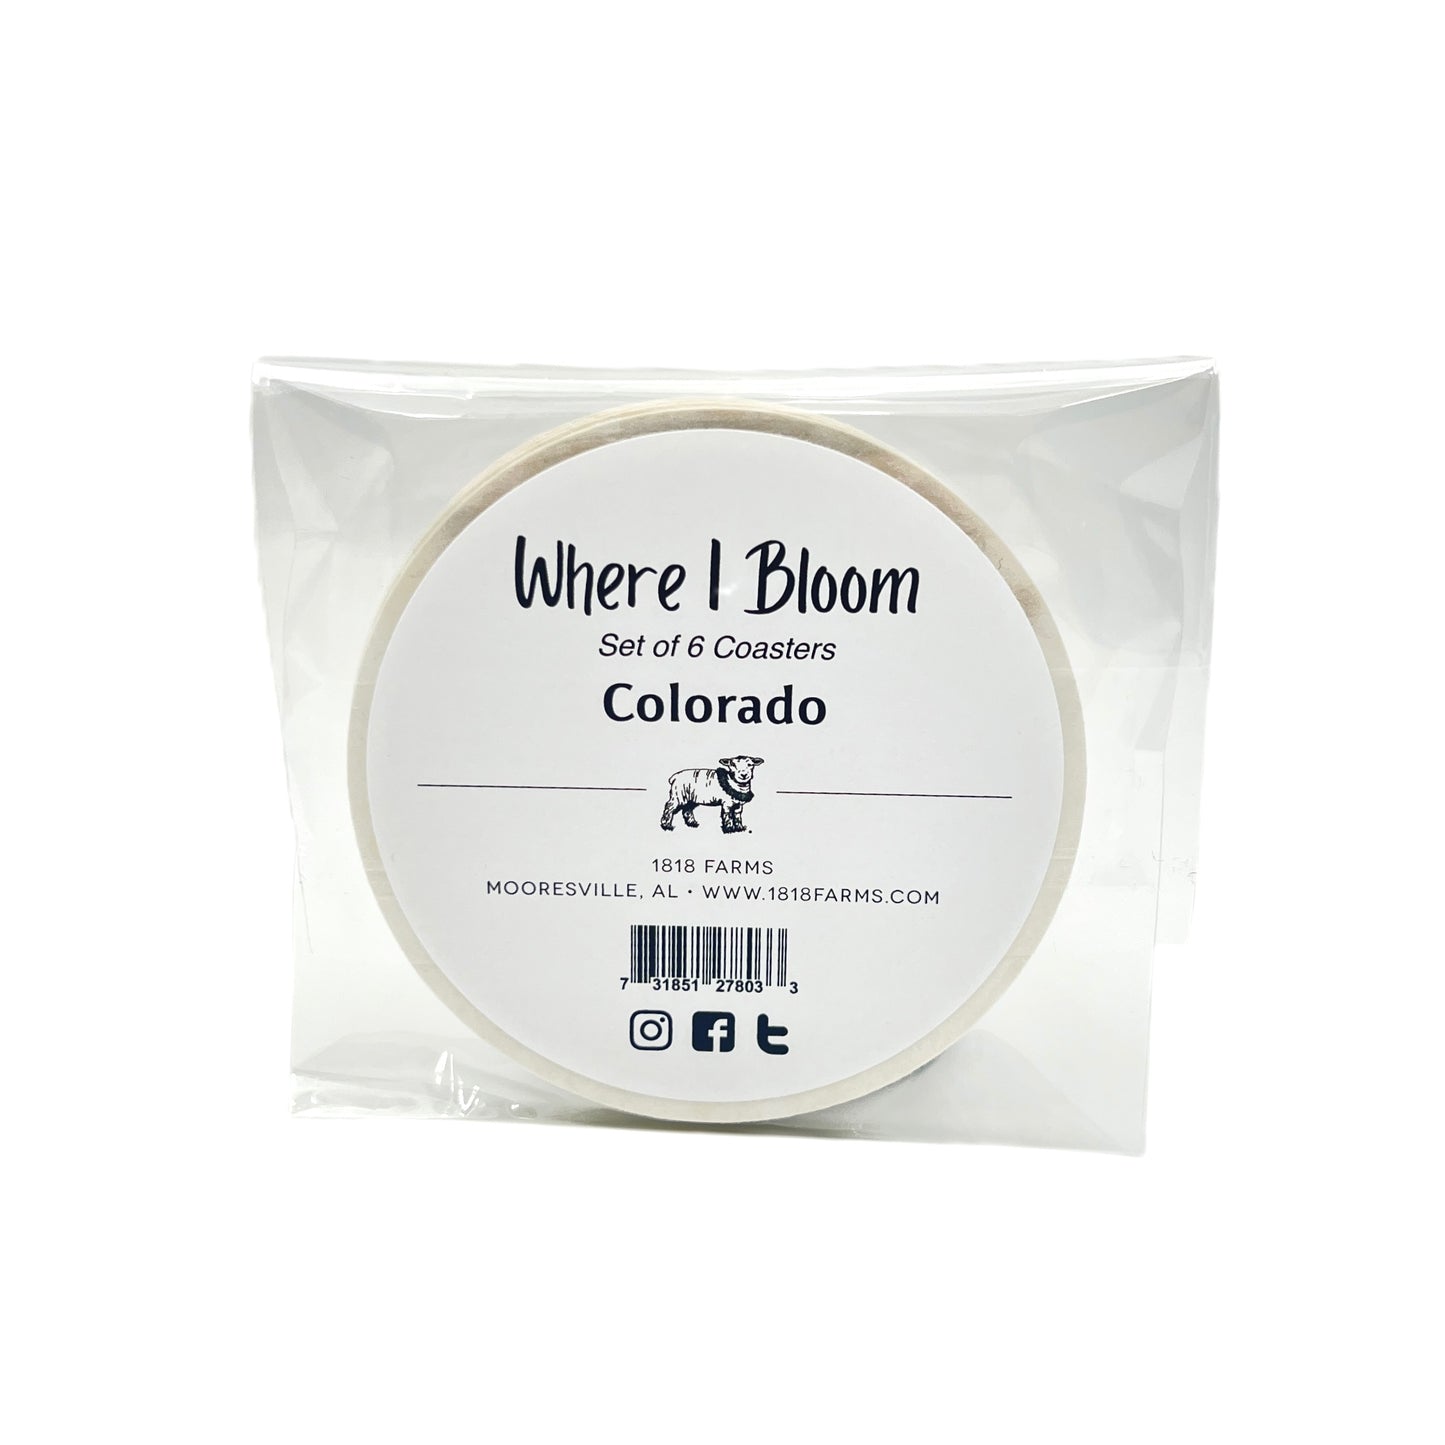 Colorado Themed Coasters (Set of 6)  - "Where I Bloom" Collection Coaster 1818 Farms   